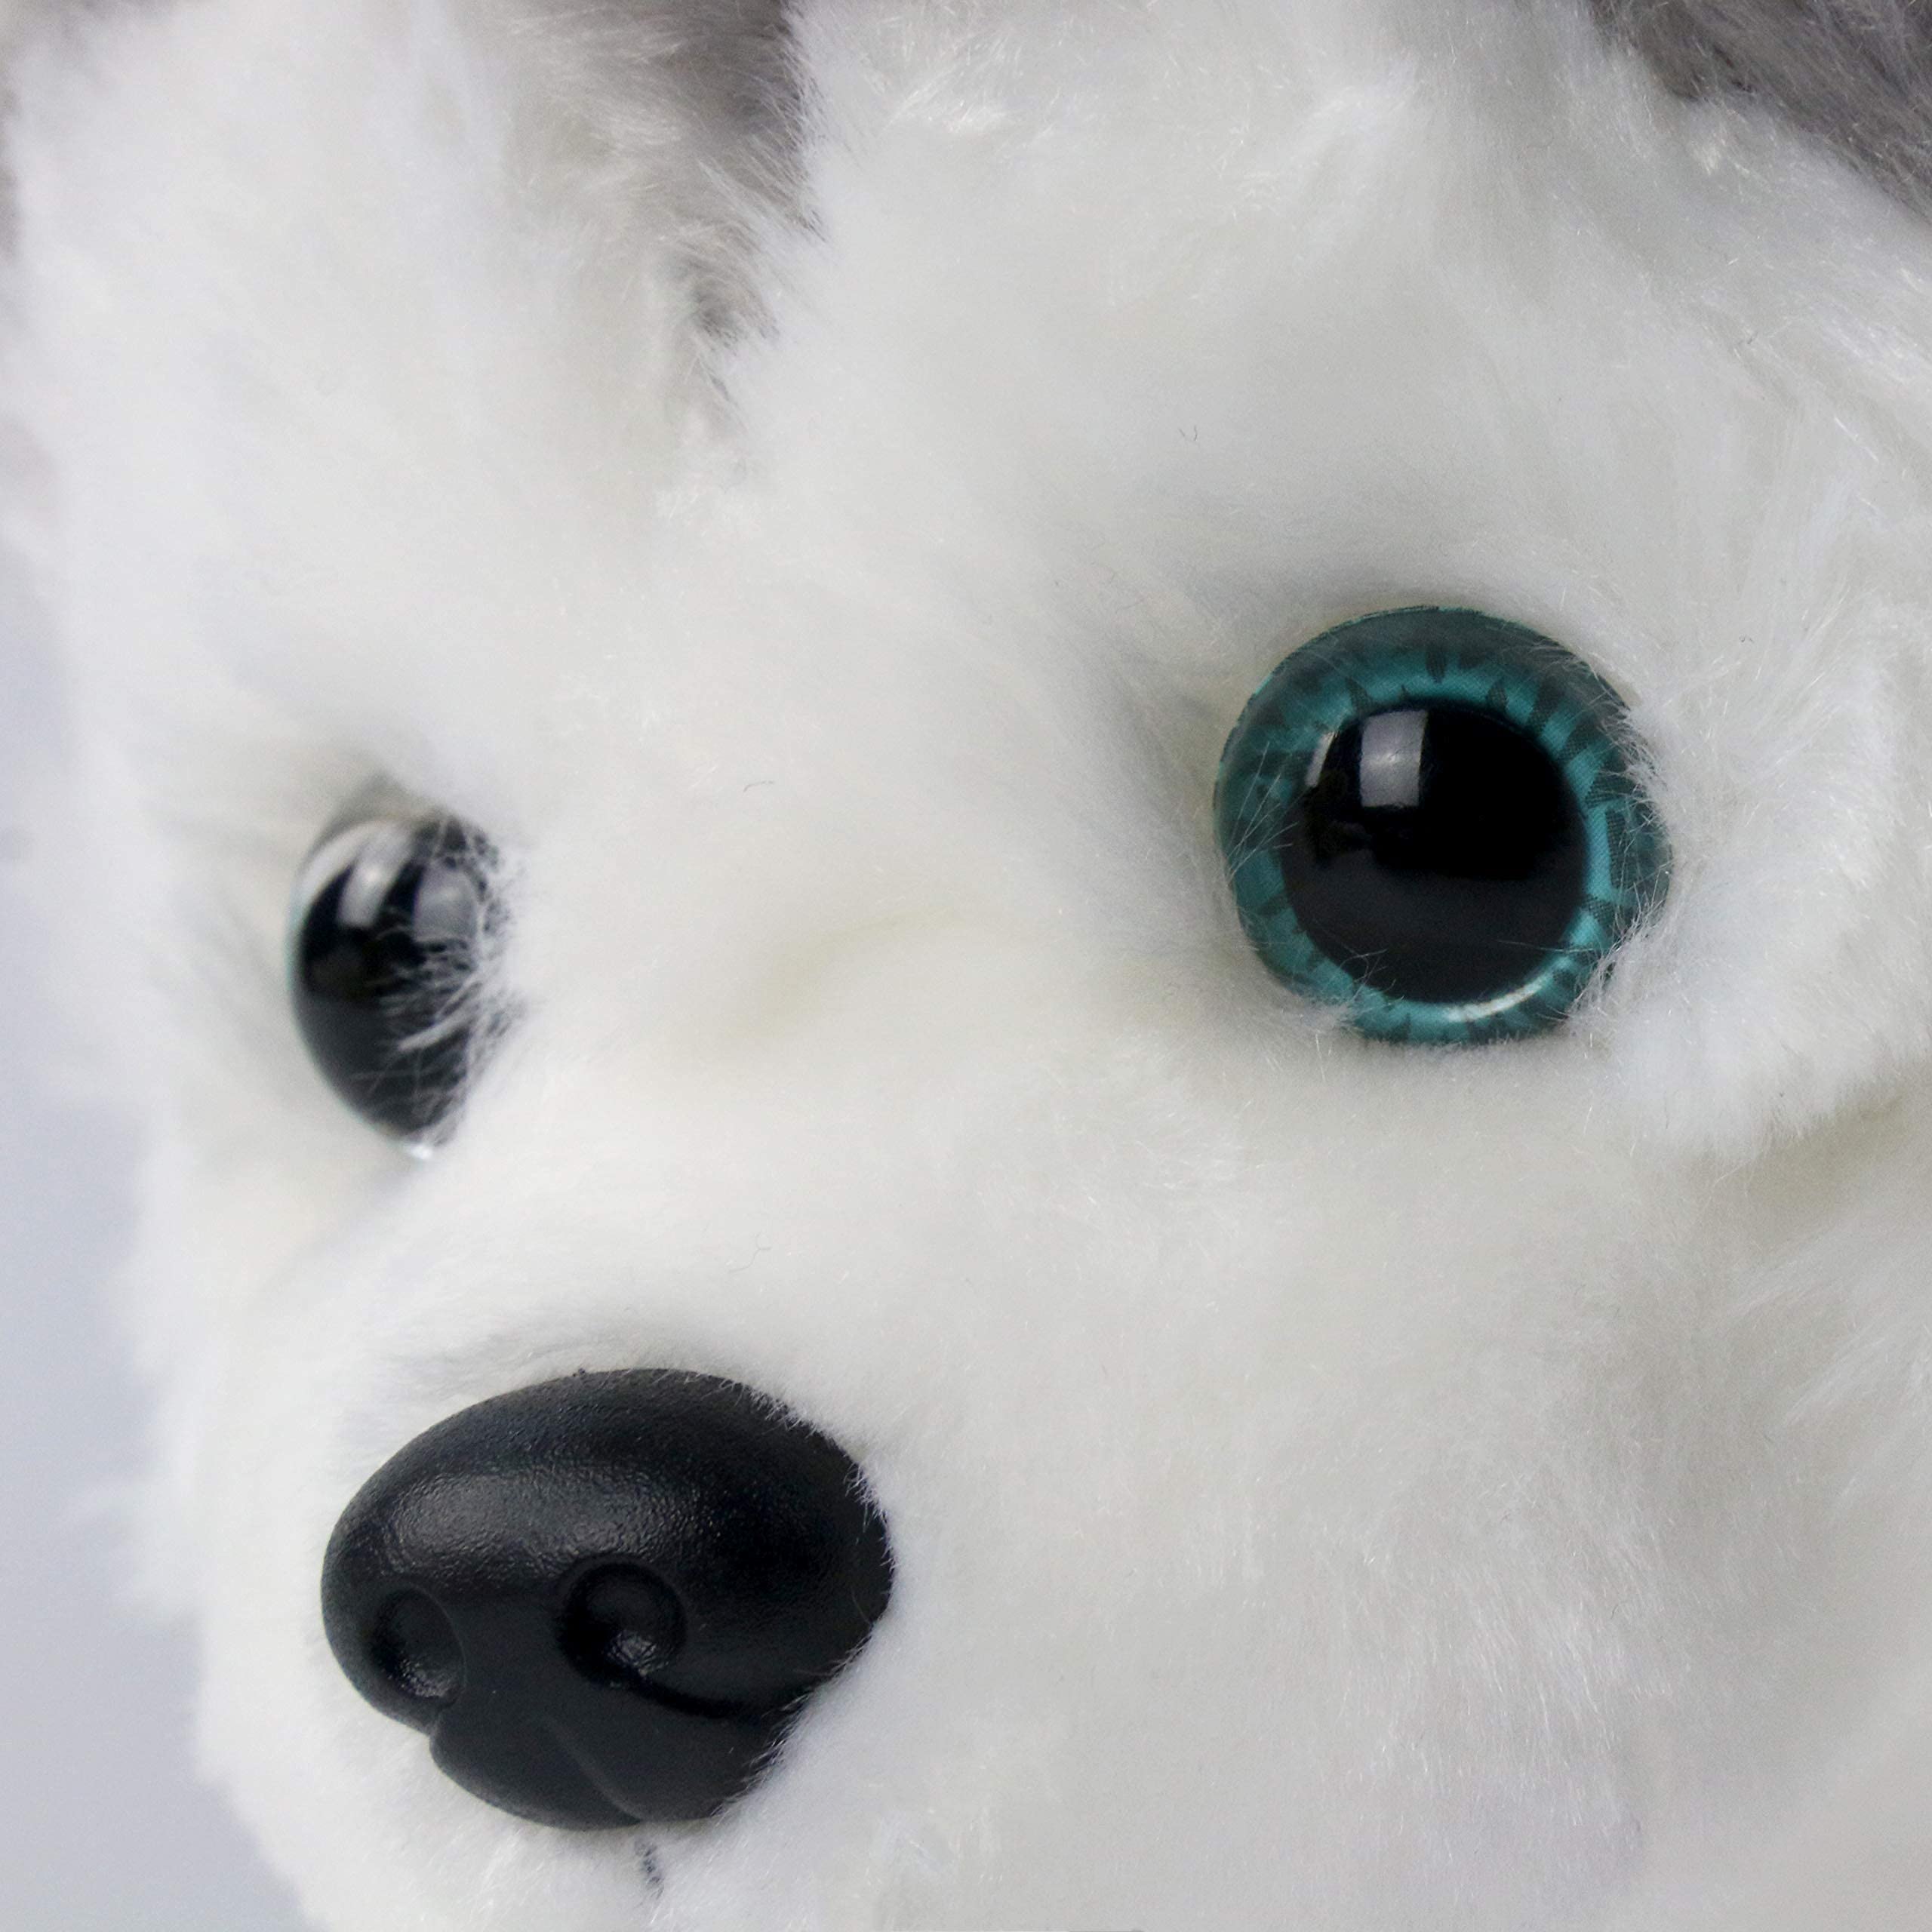 Bstaofy Husky Stuffed Animal Puppy Realistic Plush Toys Dog - Glow Guards